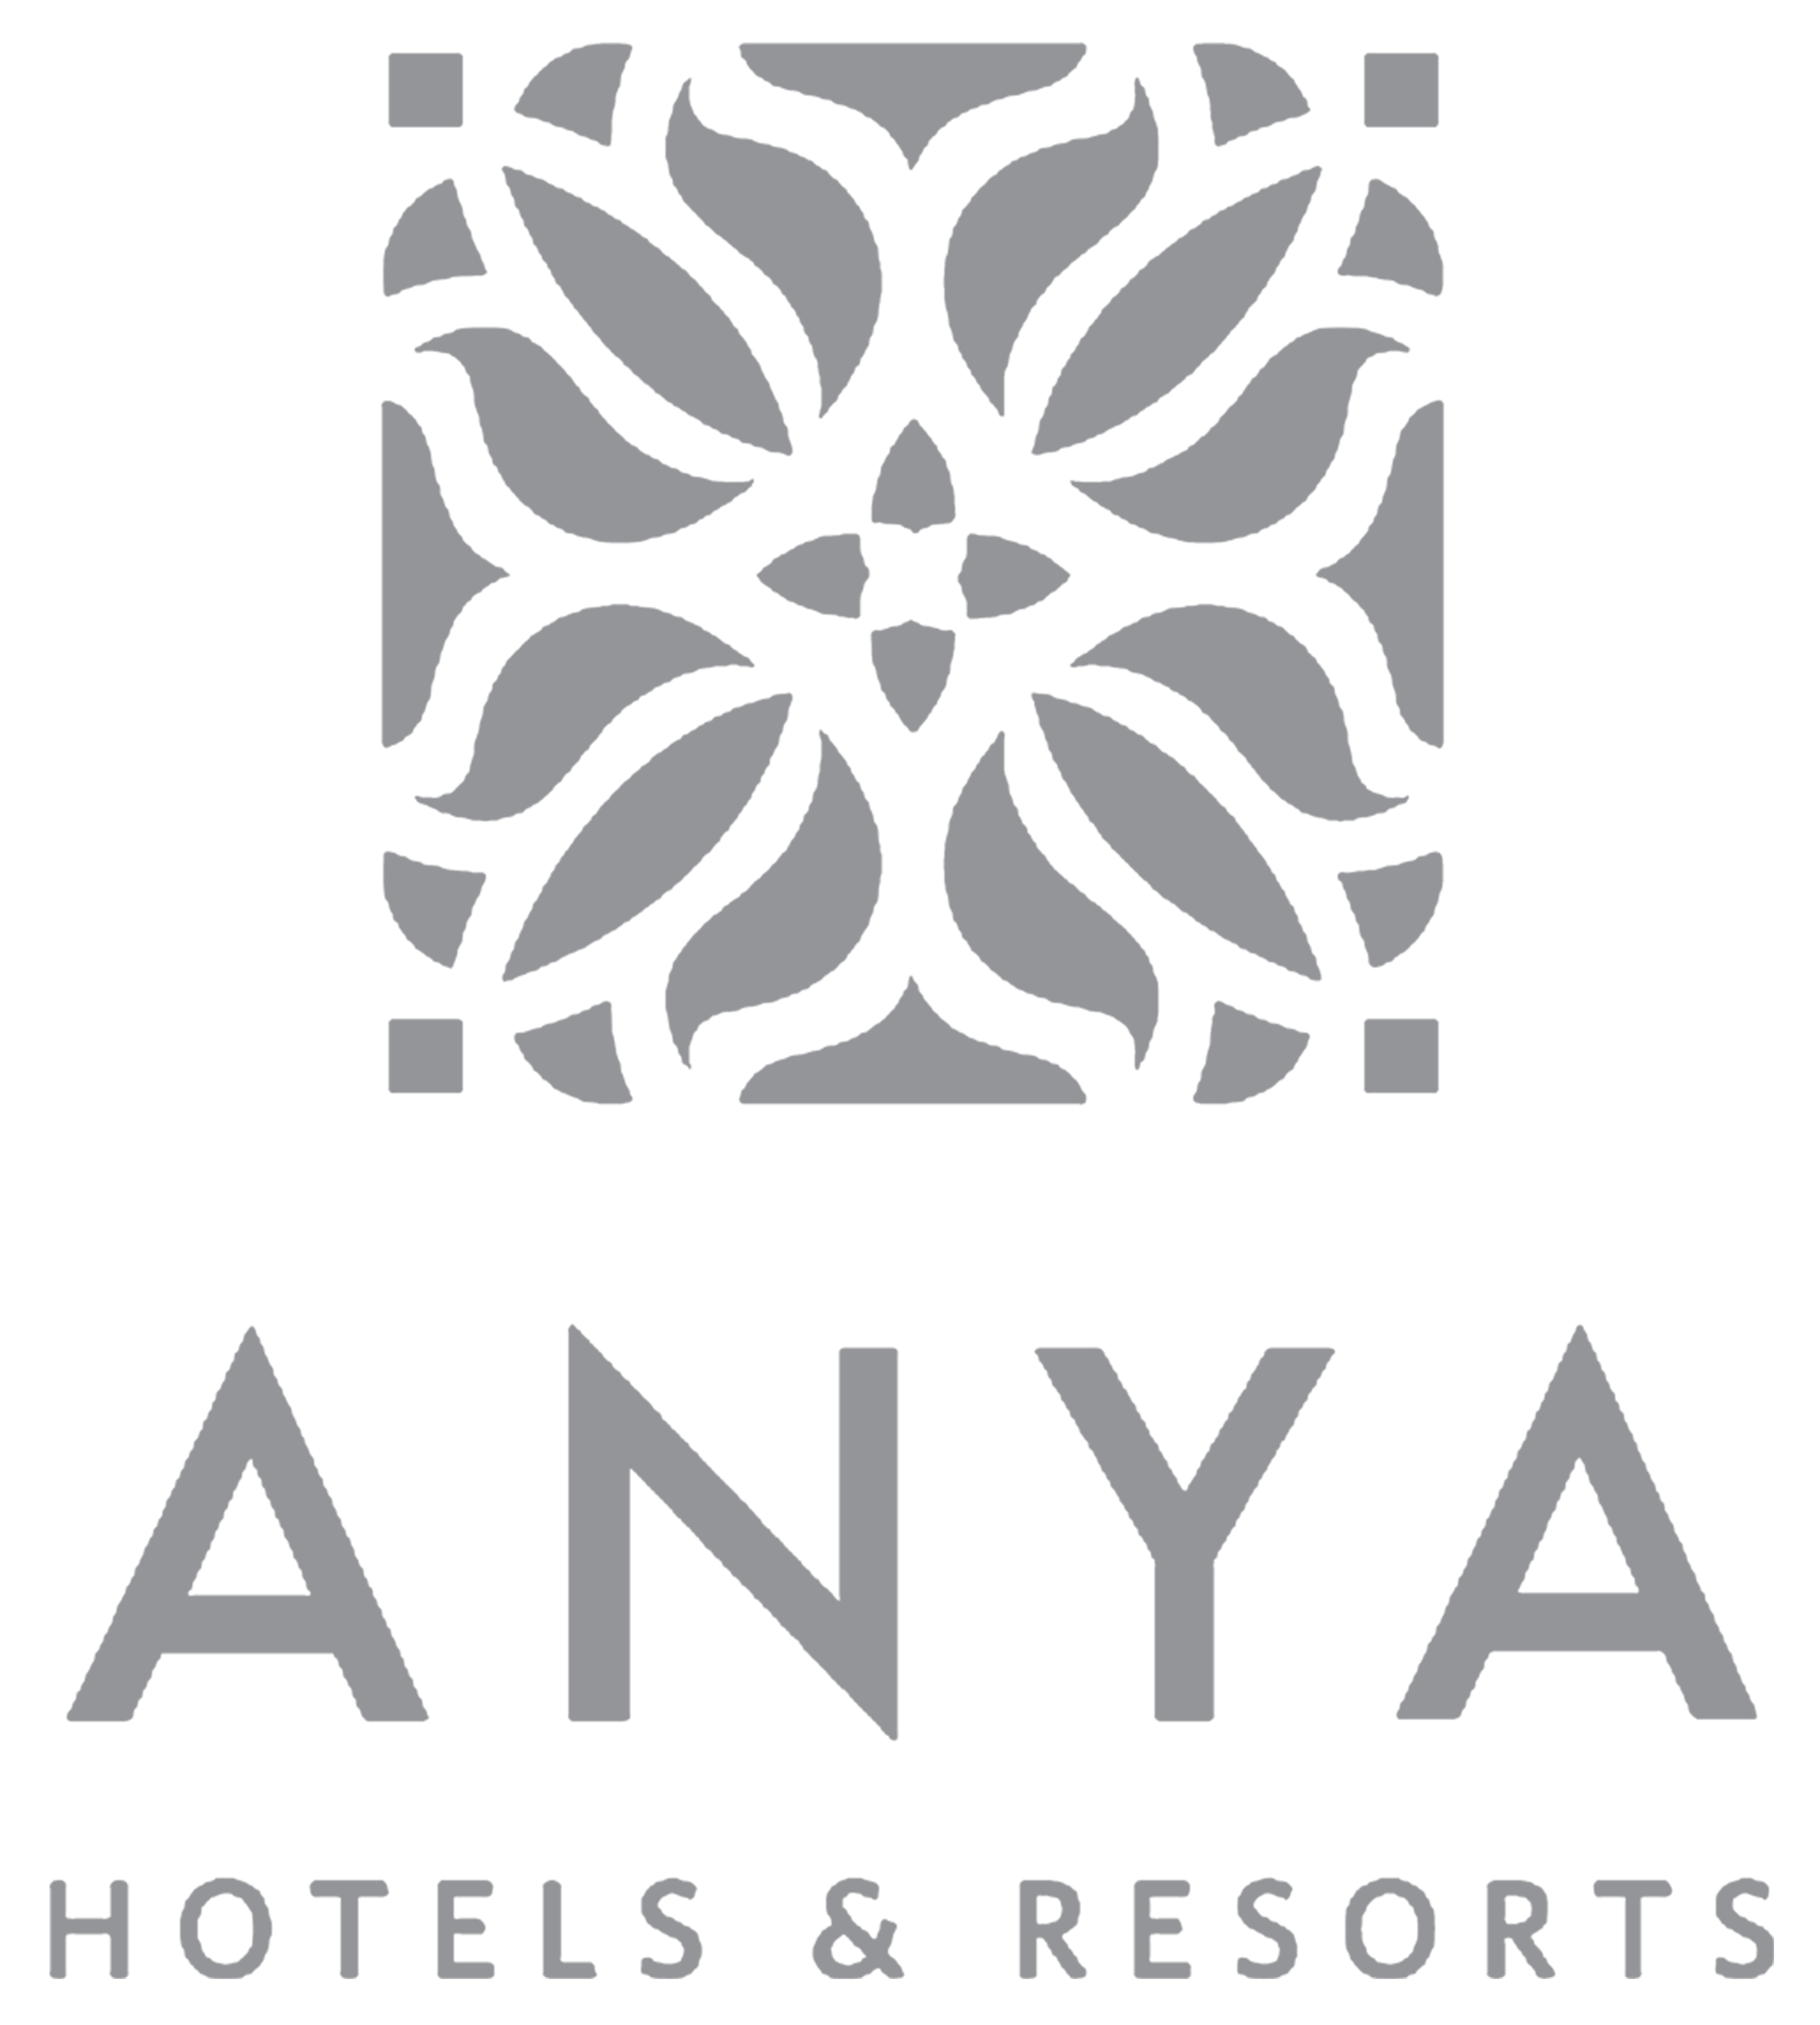 Hotels in Gurgaon |5 Star Luxury Hotels in Gurgaon | Business Hotels -Anya Hotels